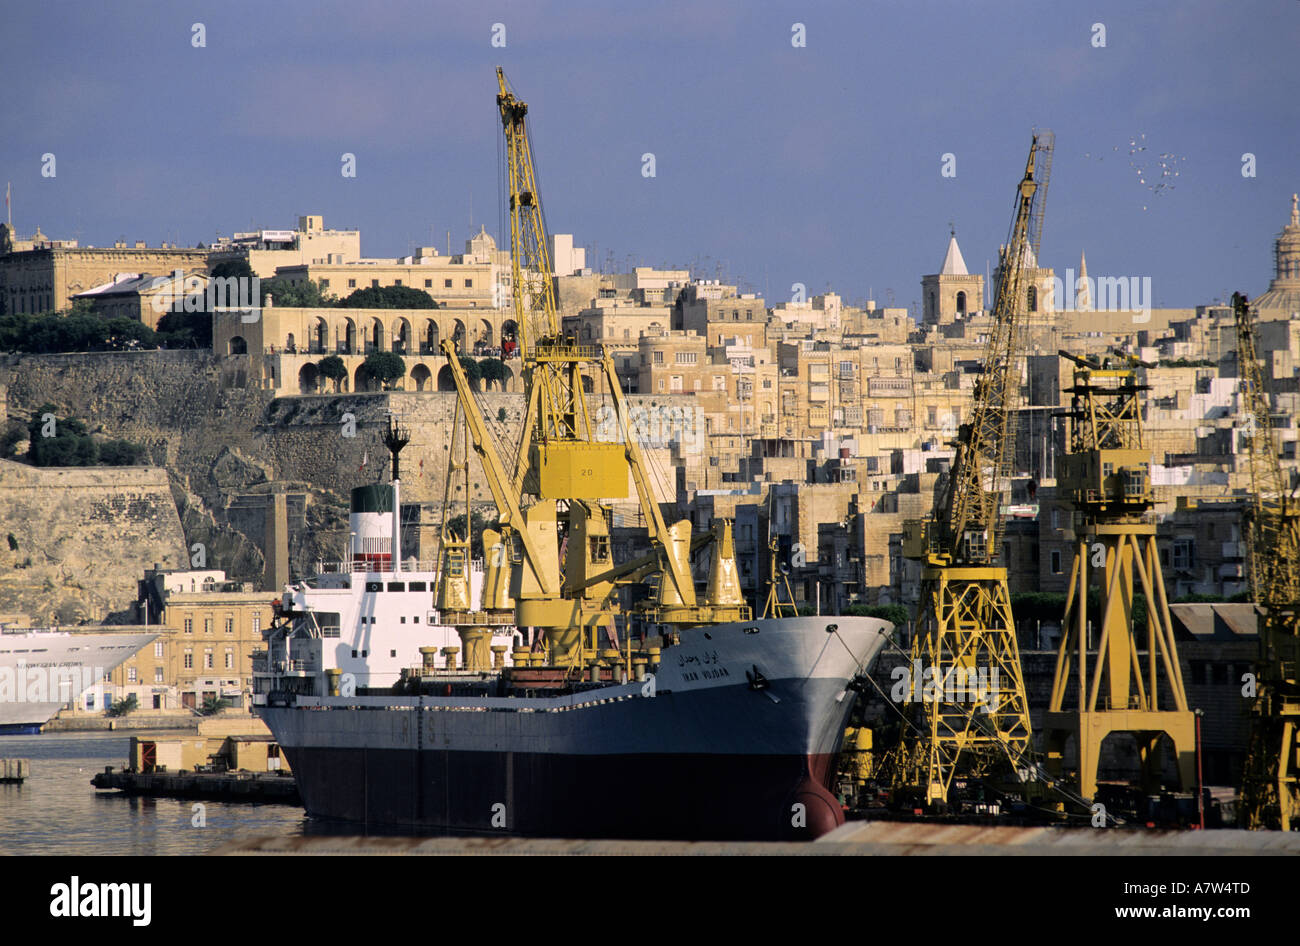 Malta, Valletta, a ship in the merchant navy's port Stock Photo